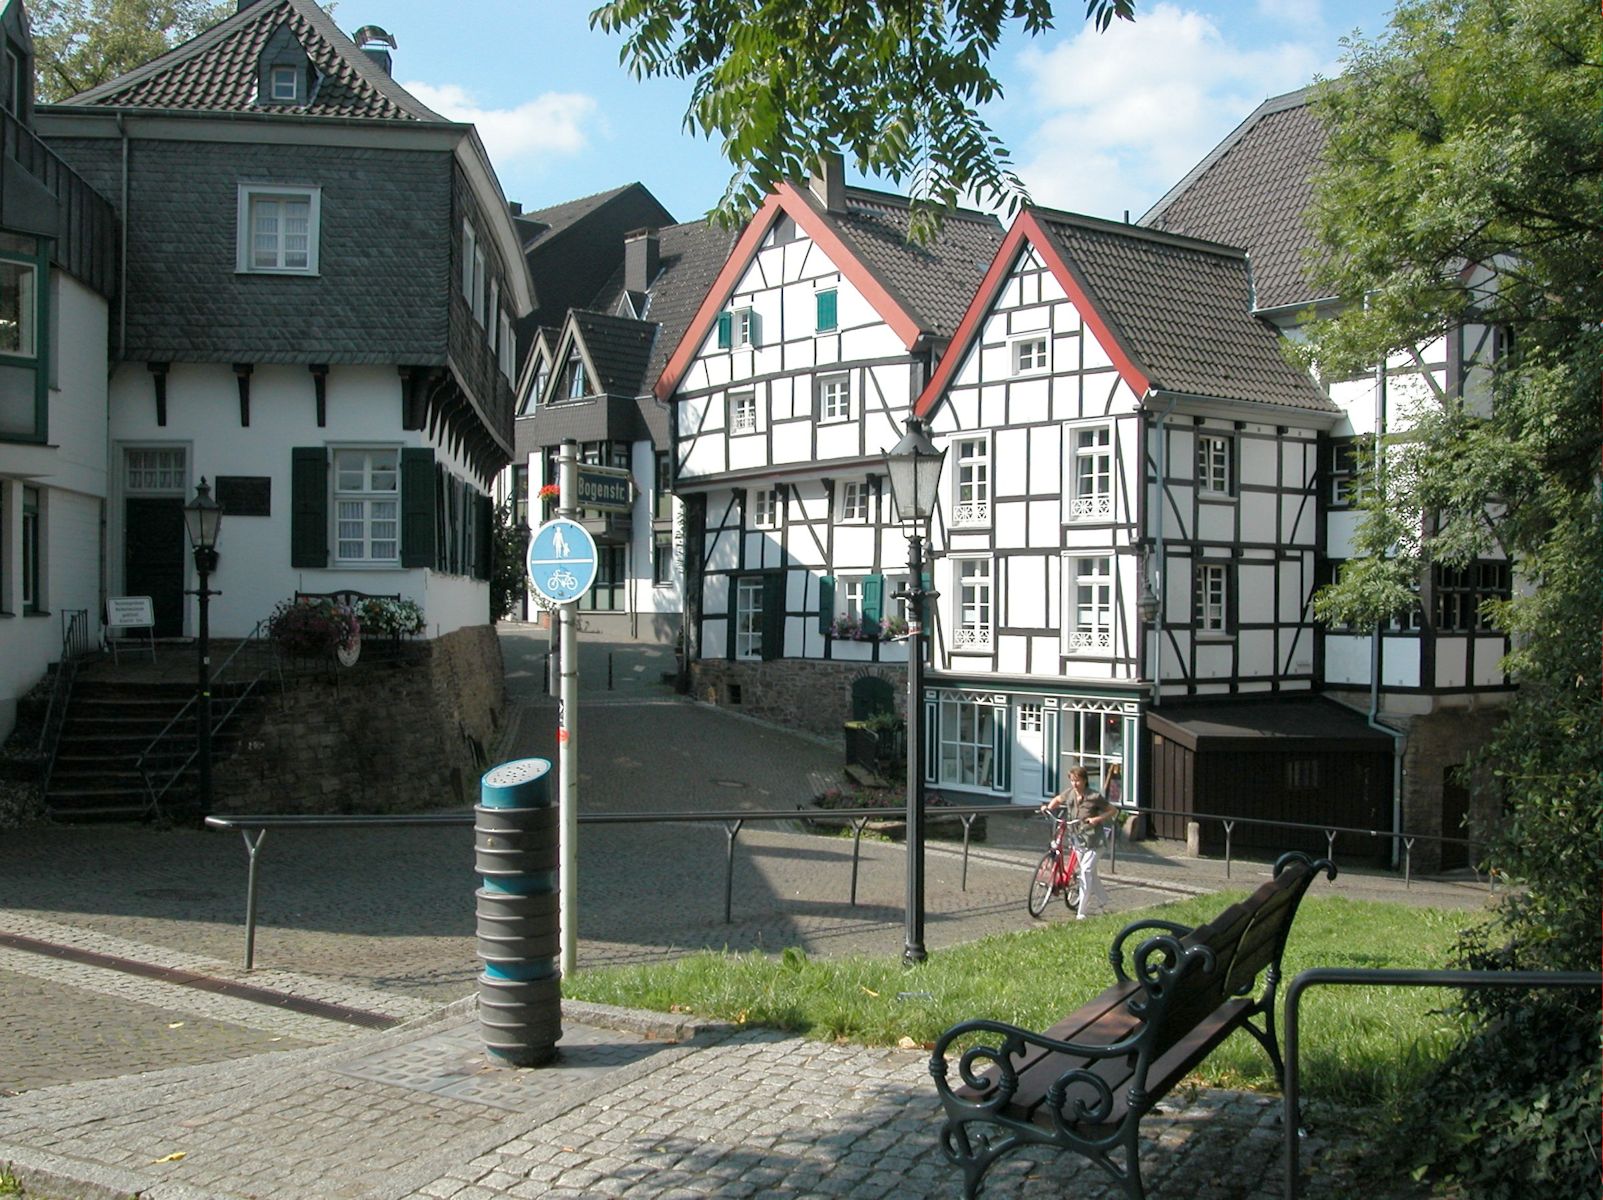 Tersteegens Wohnhaus, heute „Heimatmuseum Tersteegenhaus”, in Mülheim an der Ruhr